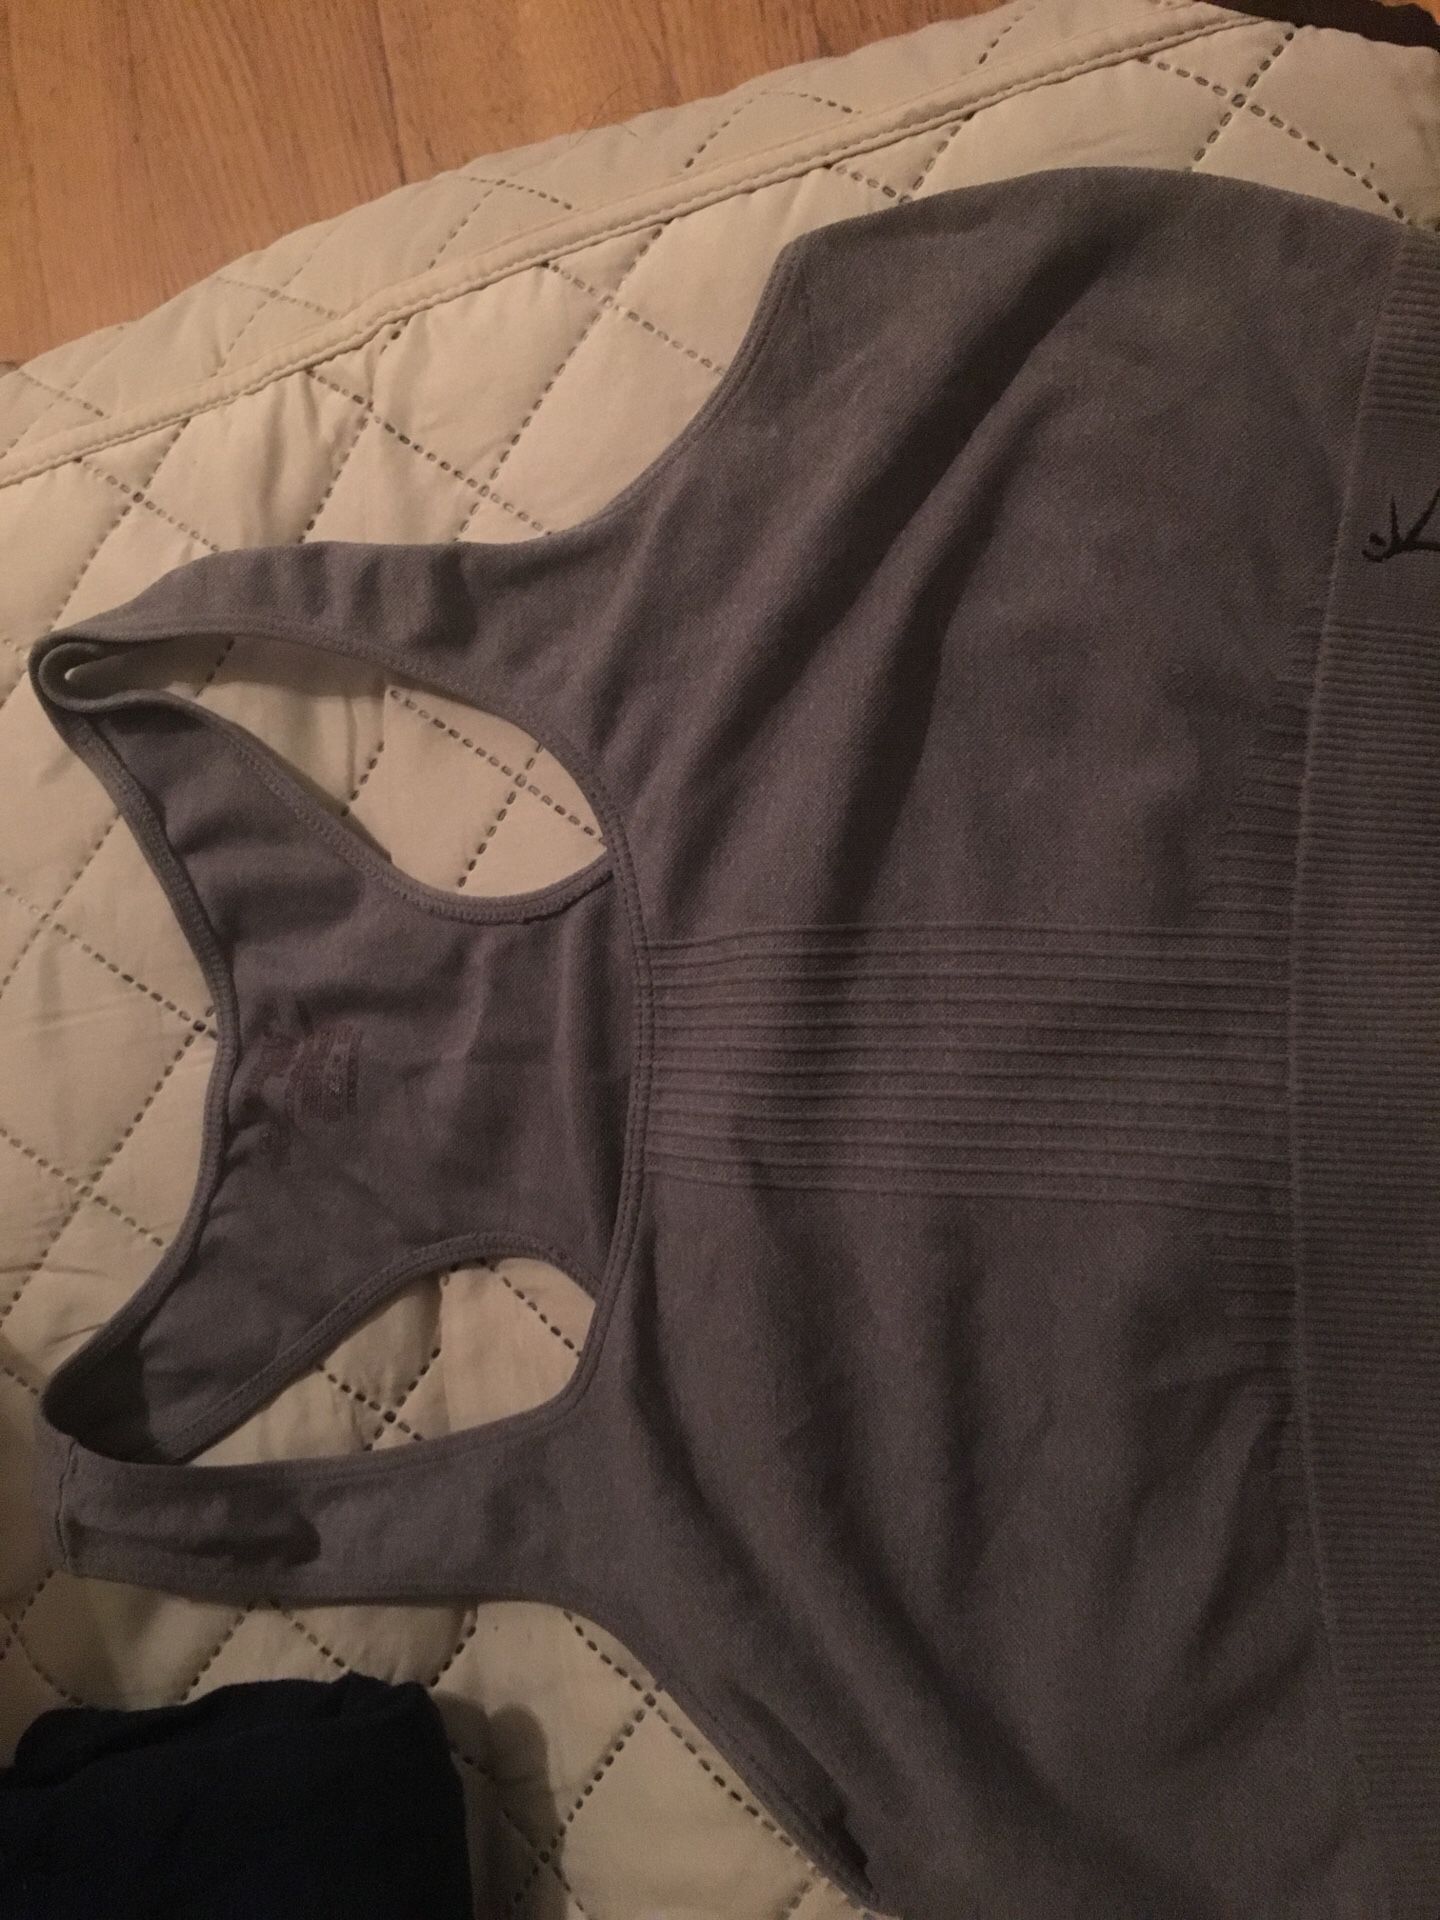 Free sports bra gray size XL